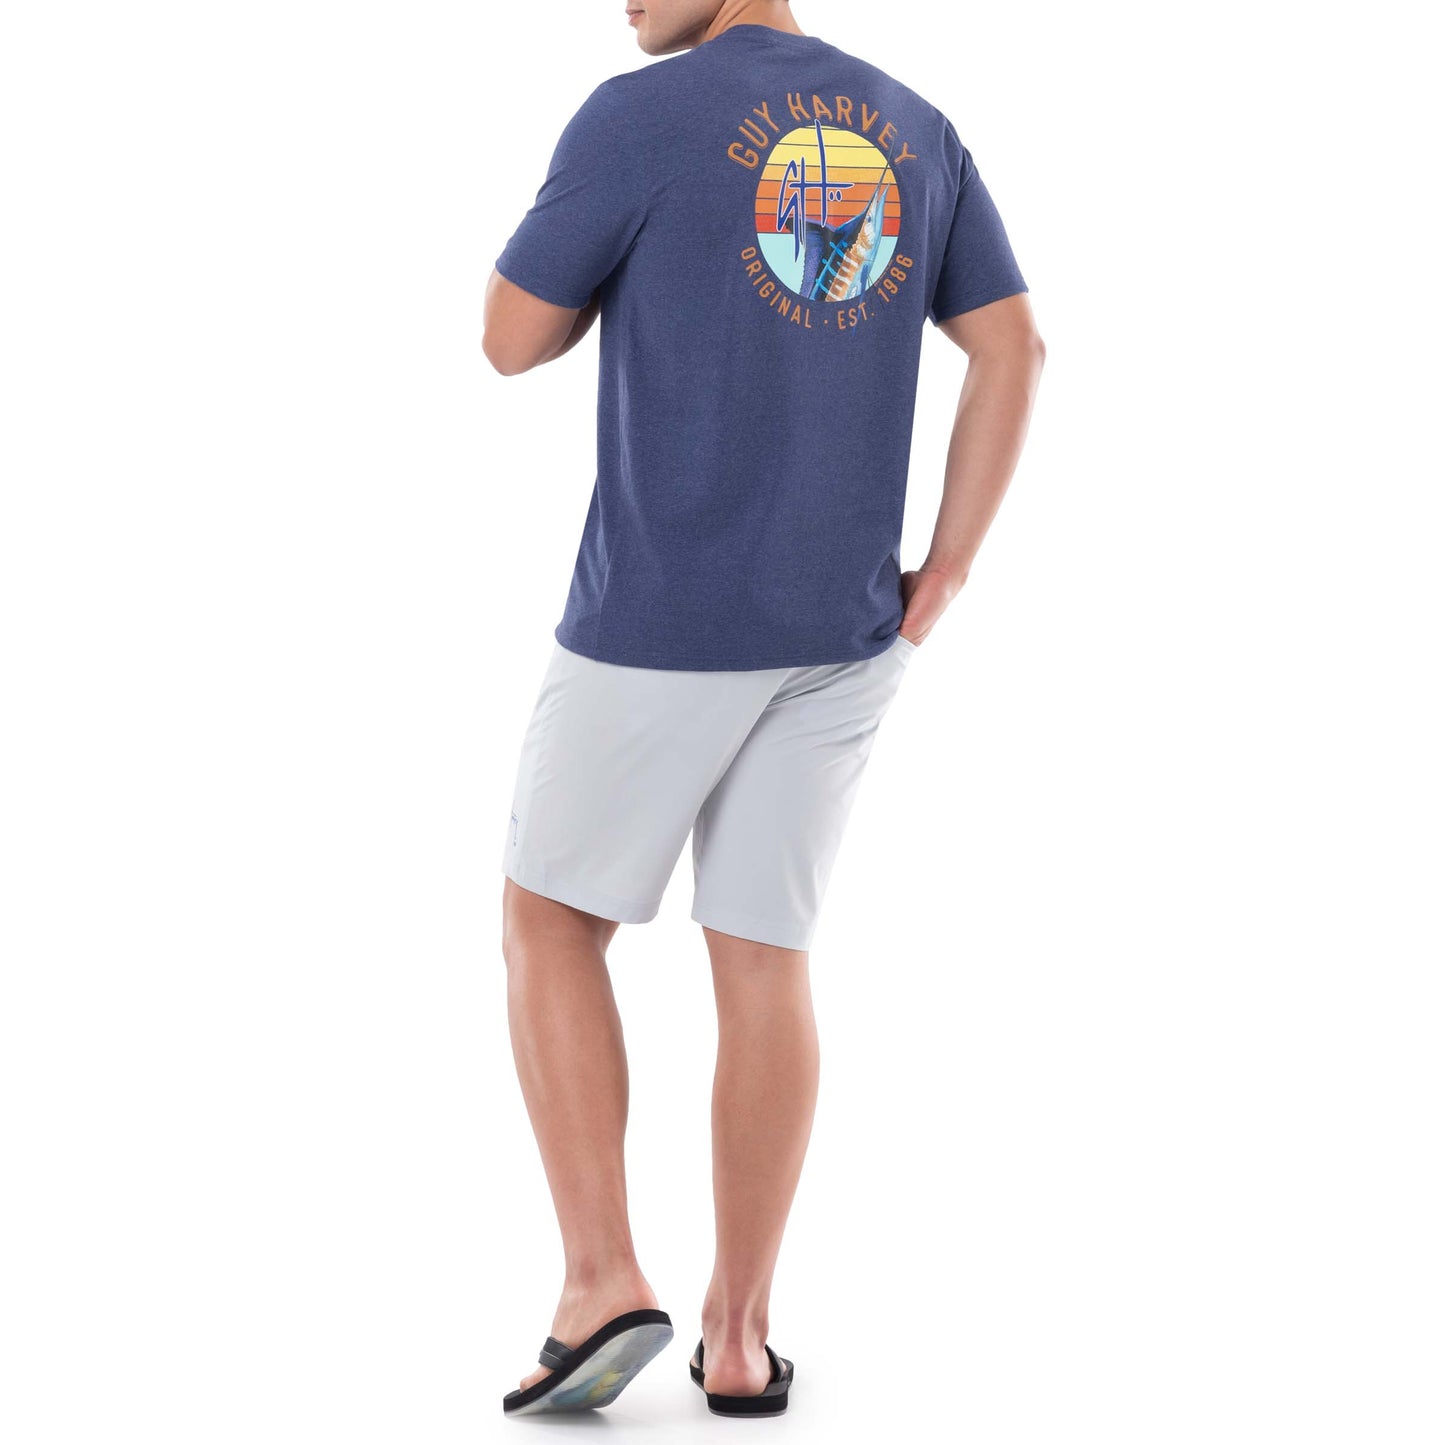 Men's GH Sunset Threadcycled Short Sleeve T-Shirt